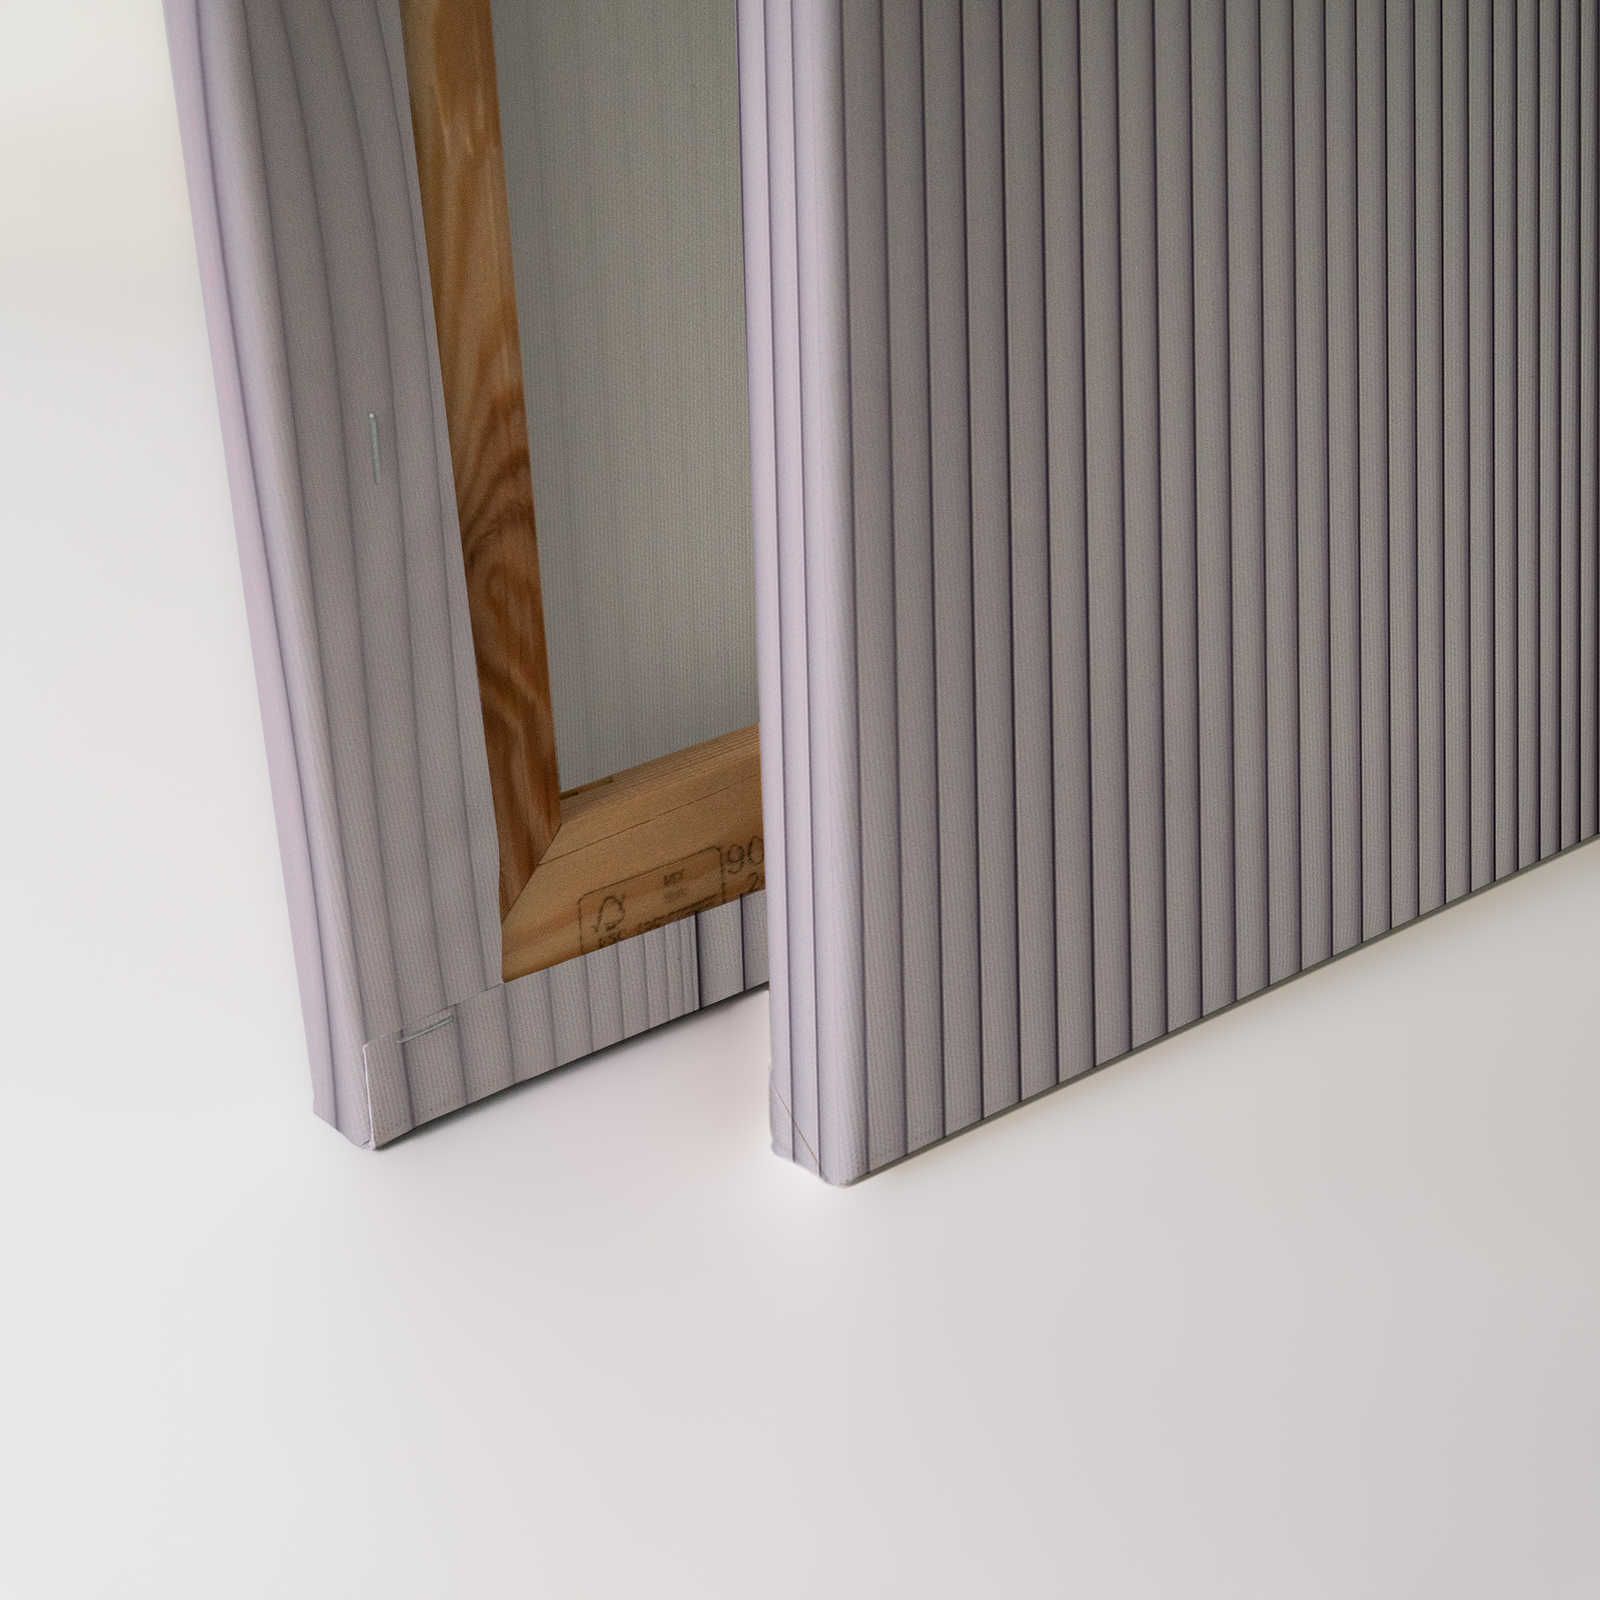             Magic Wall 1 - Streifen Leinwandbild 3D Illusion Effekt, Violett & Weiß – 0,90 m x 0,60 m
        